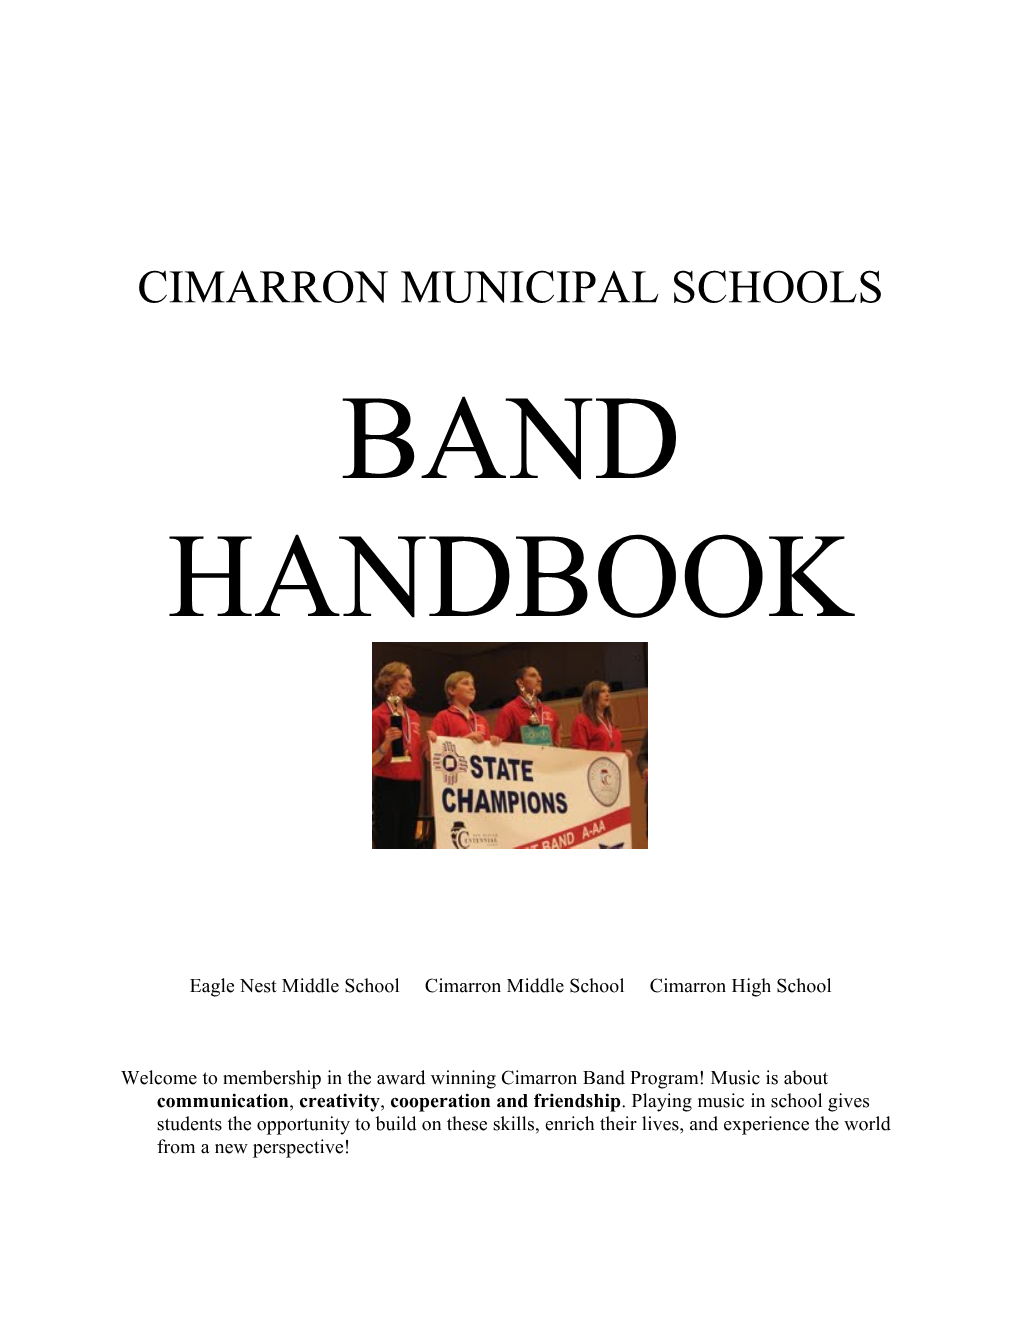 Cimarron Municipal Schools